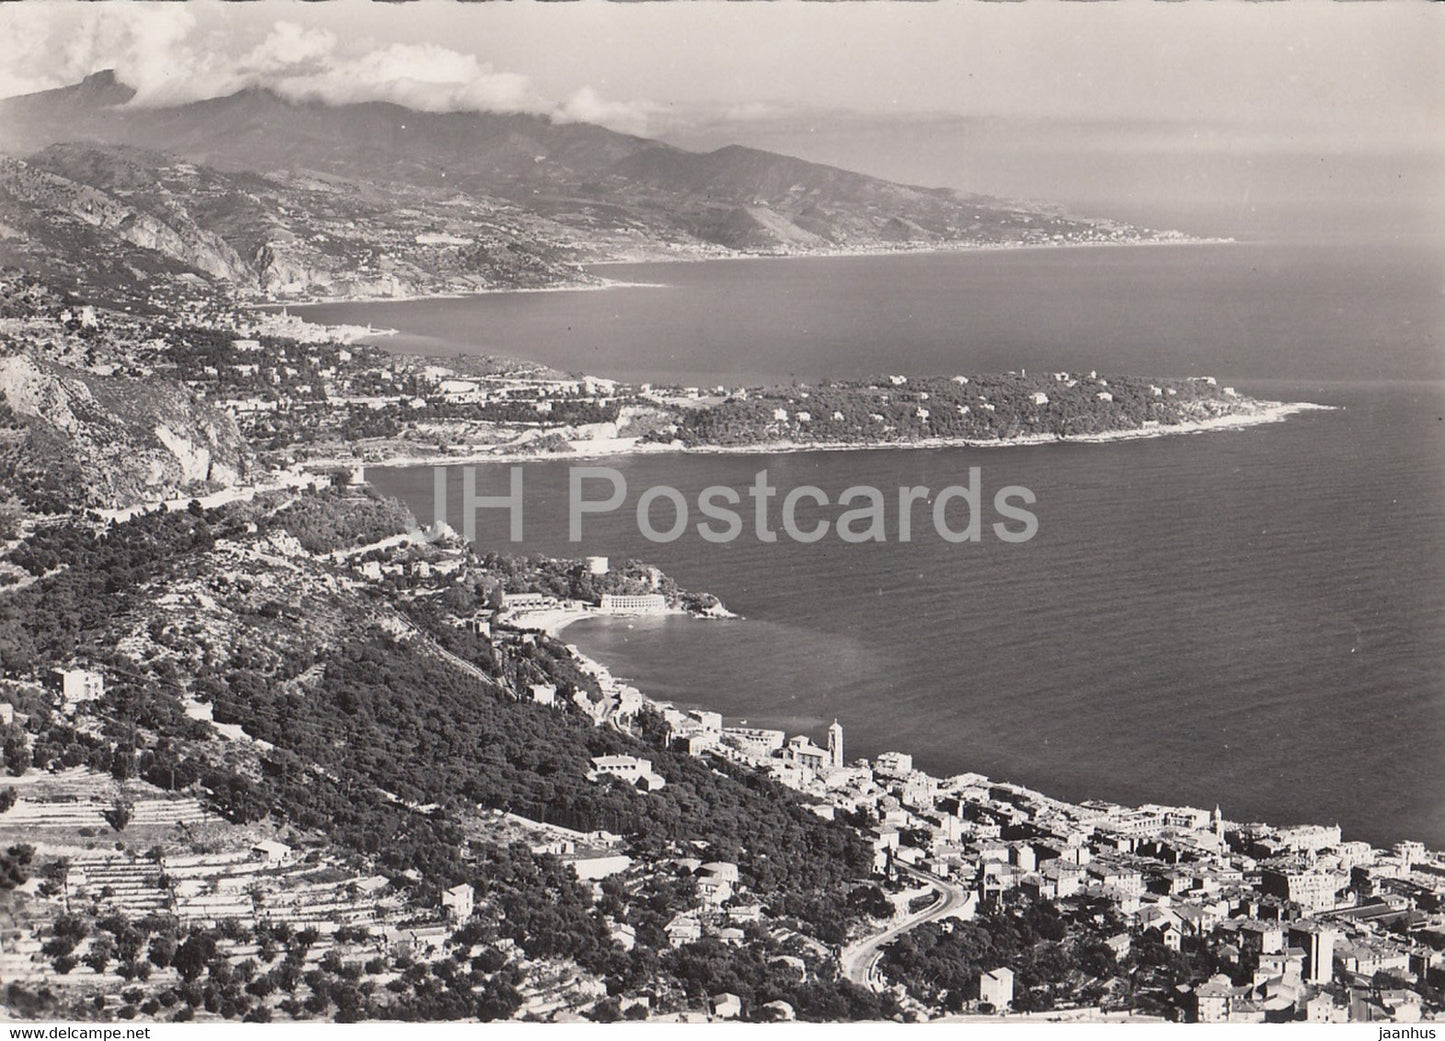 Vue panoramique sur Monte Carlo - Le Beach - Le Cap Martin - Menton - old postcard - 1954 - Monaco - used - JH Postcards